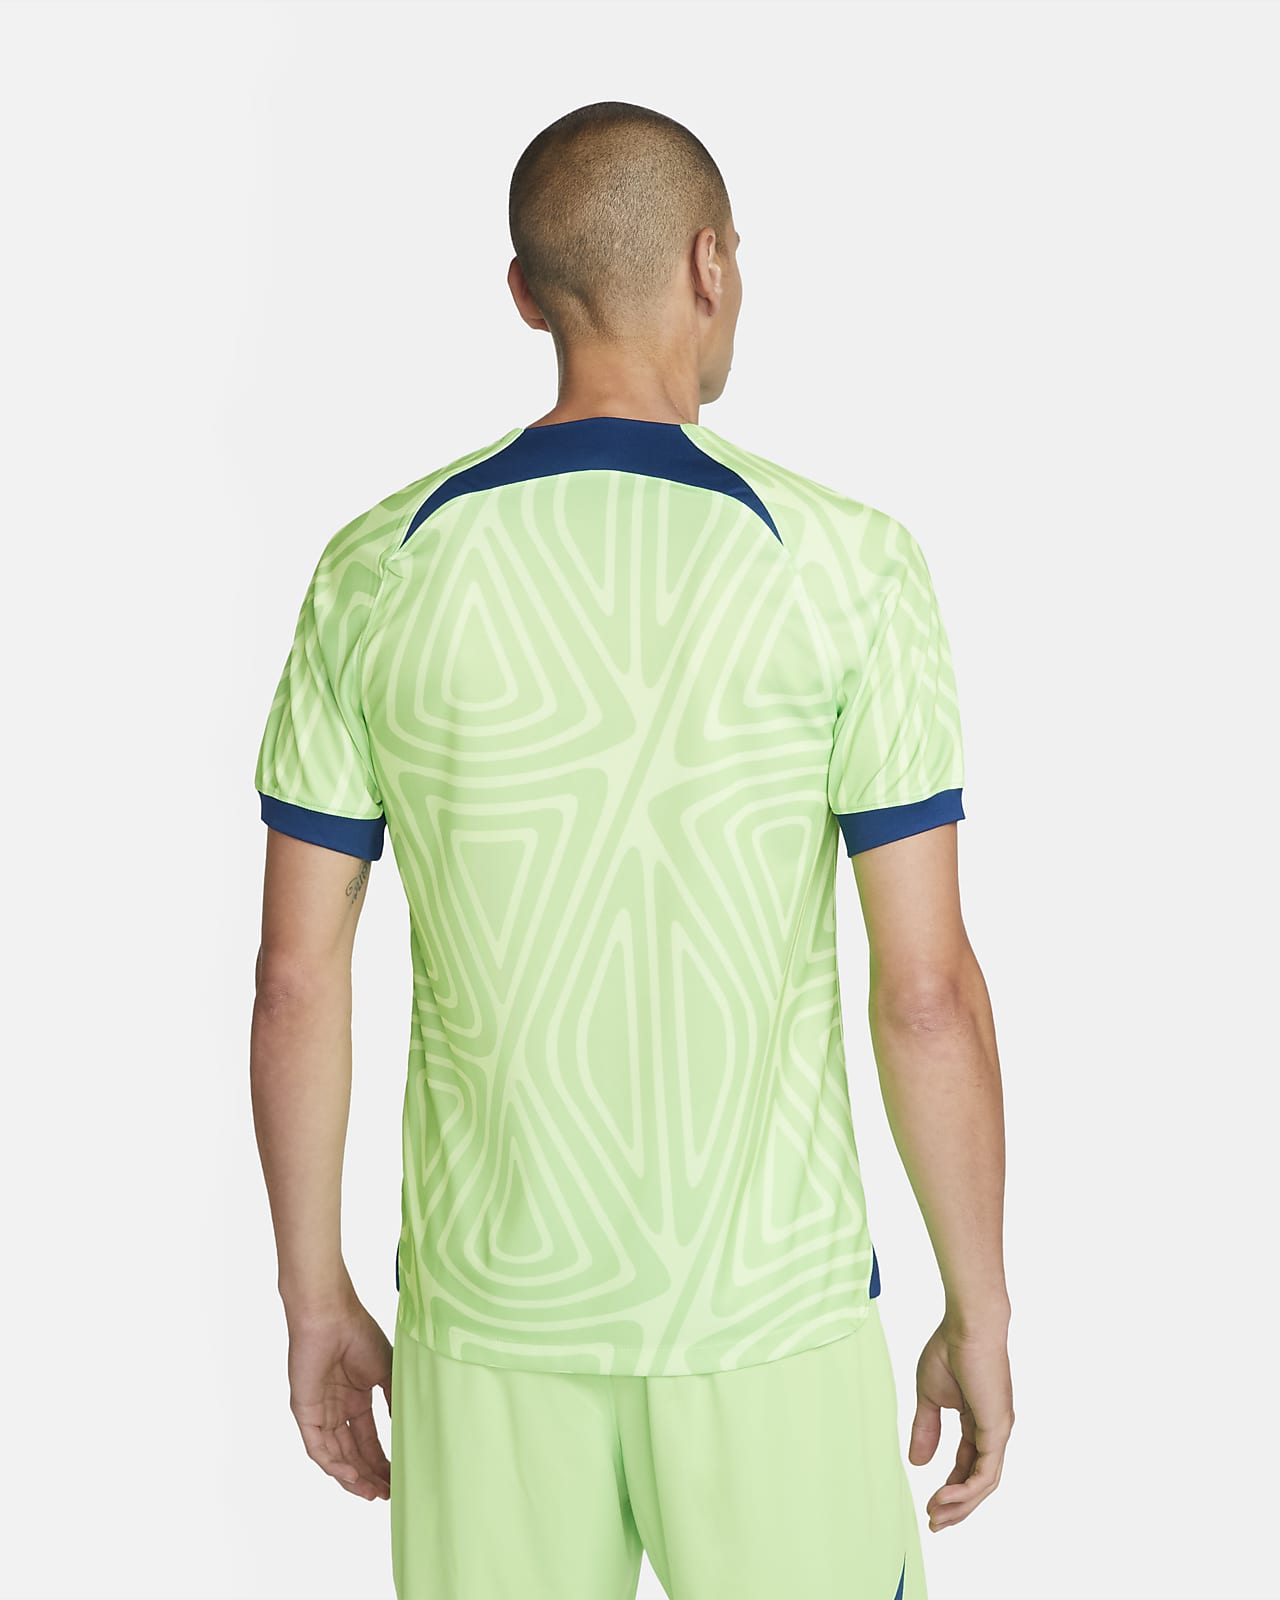 VfL Wolfsburg 2022/23 Stadium Home Men's Nike Dri-FIT Football Shirt ...